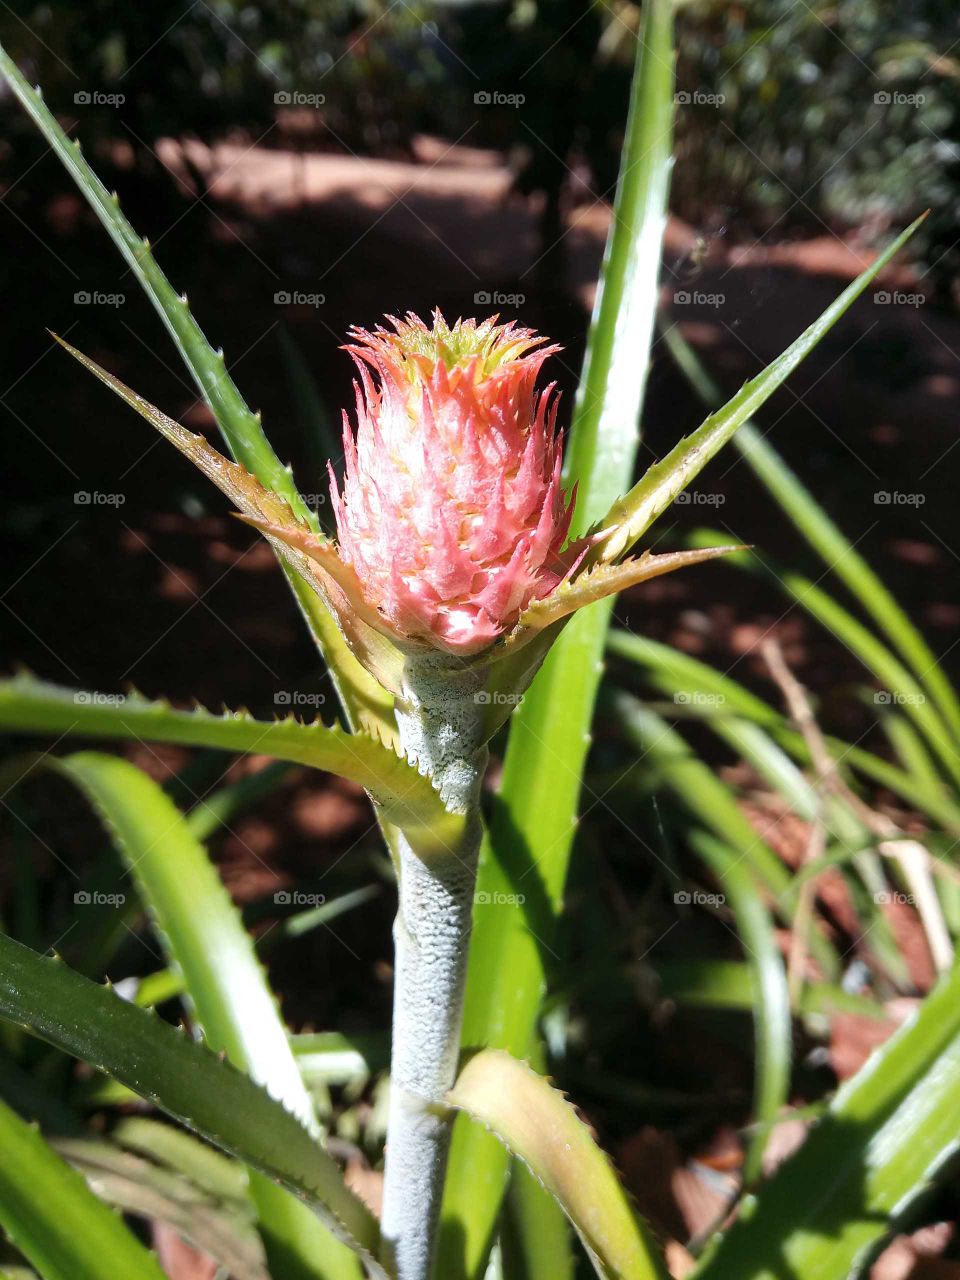 pineapple plant at munnar hills, kerla, india